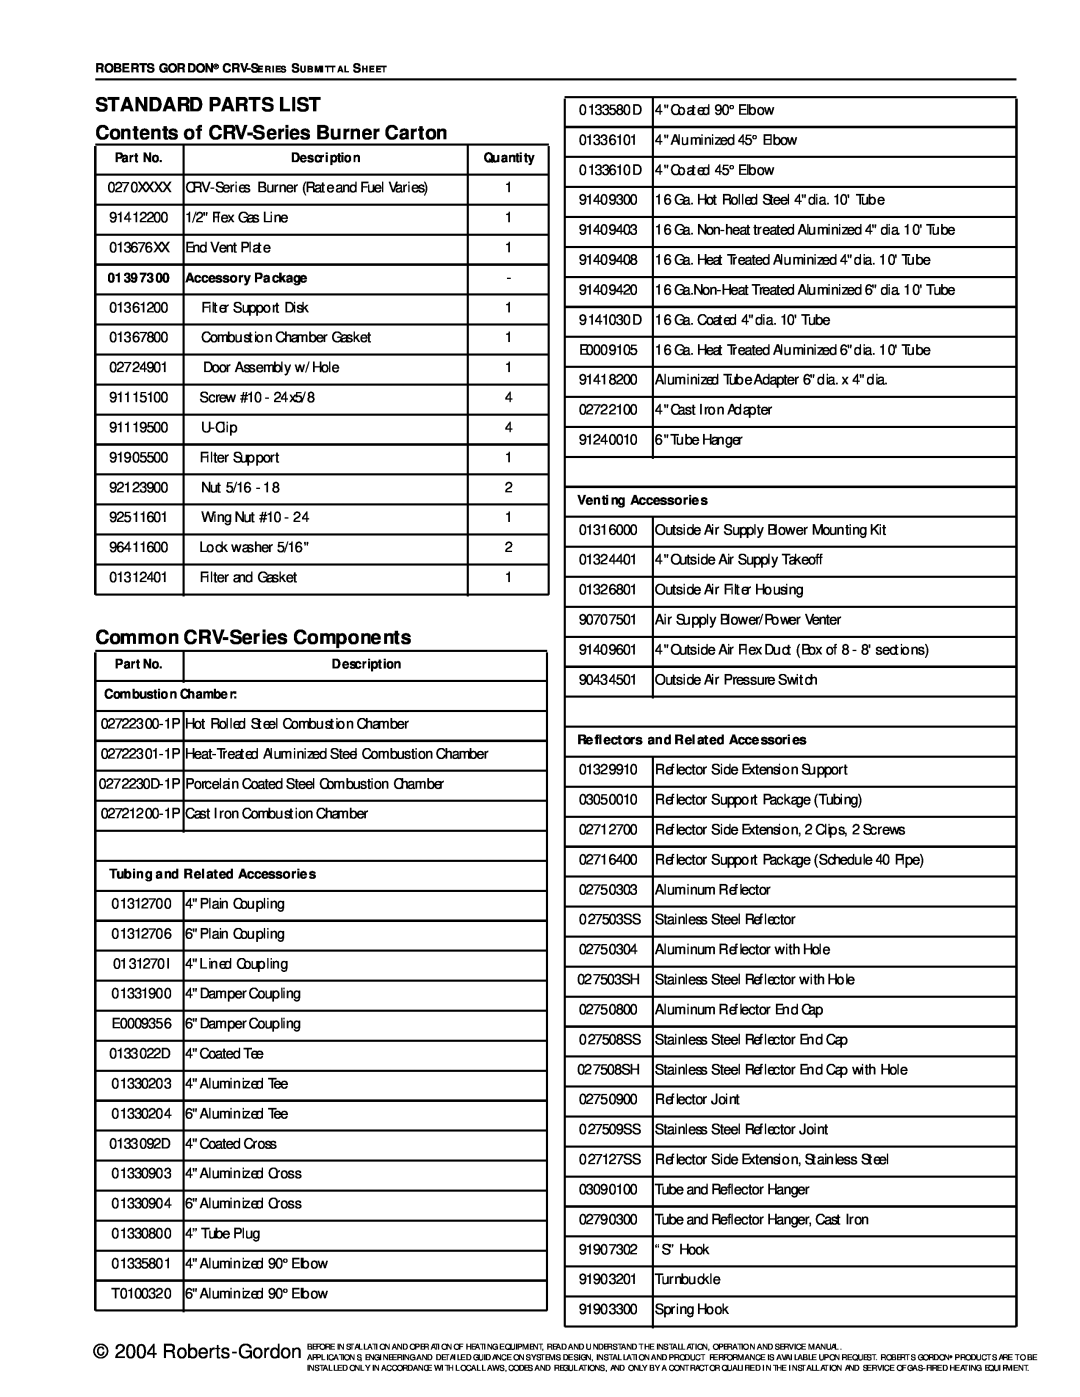 Roberts Gorden service manual Standard Parts List, Contents of CRV-SeriesBurner Carton, Common CRV-SeriesComponents 